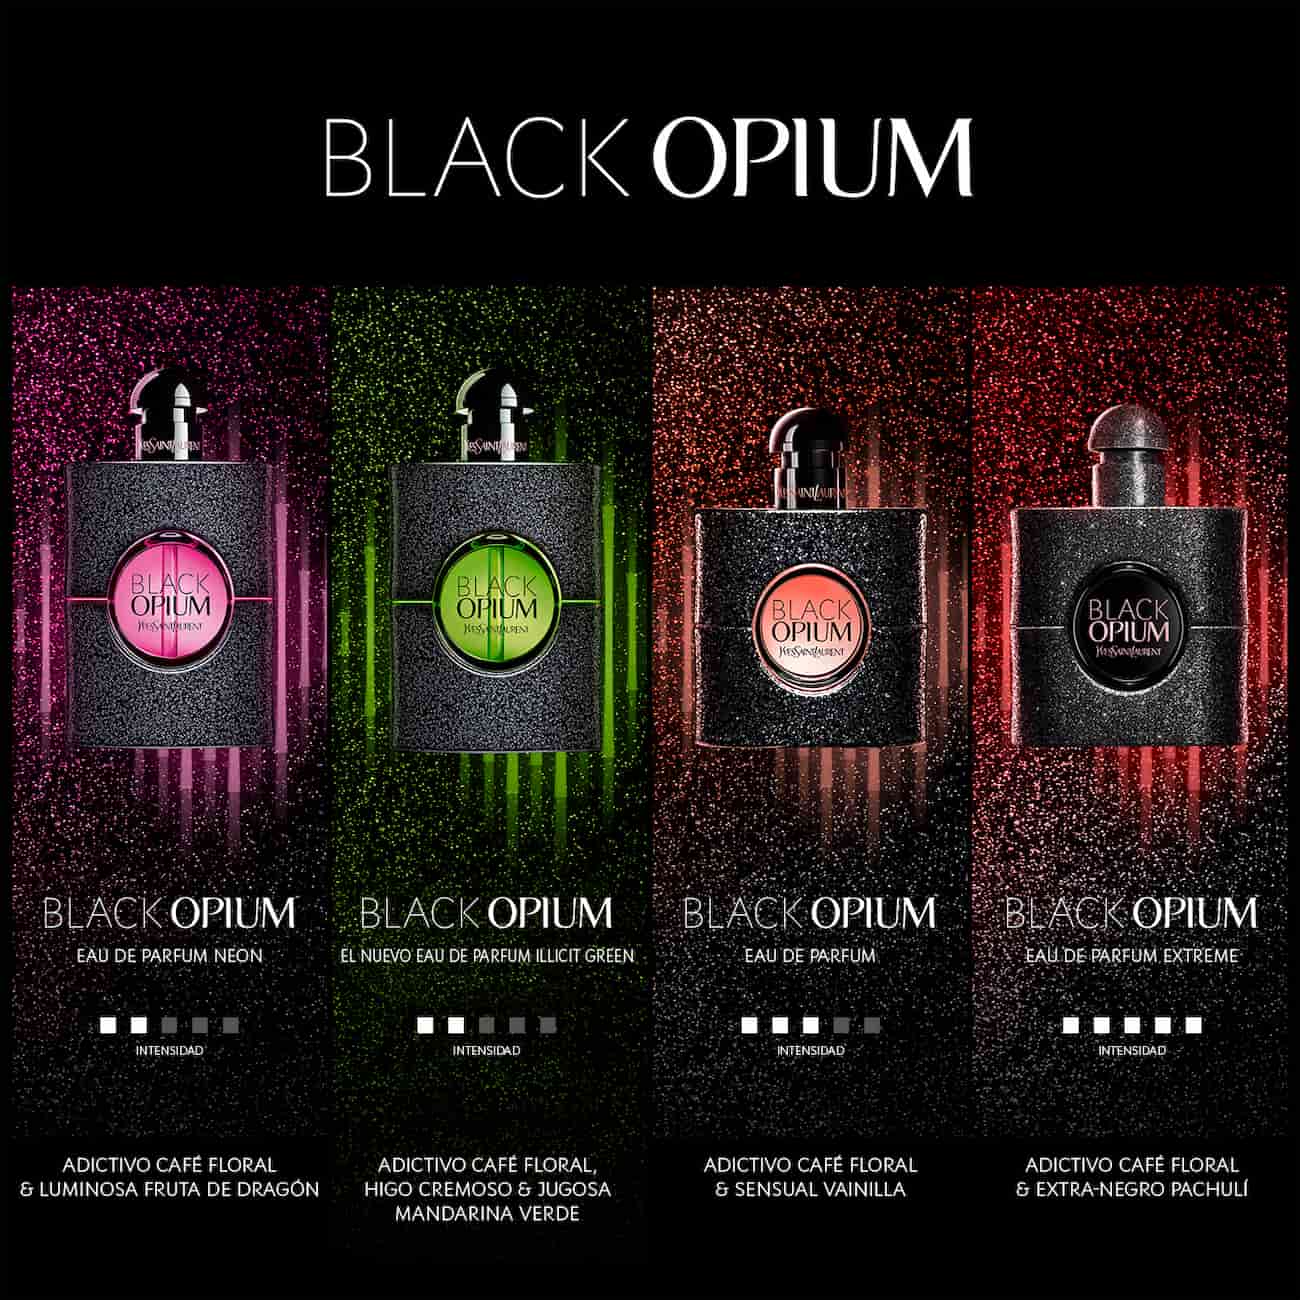 Black Opium dans ses 4 versions